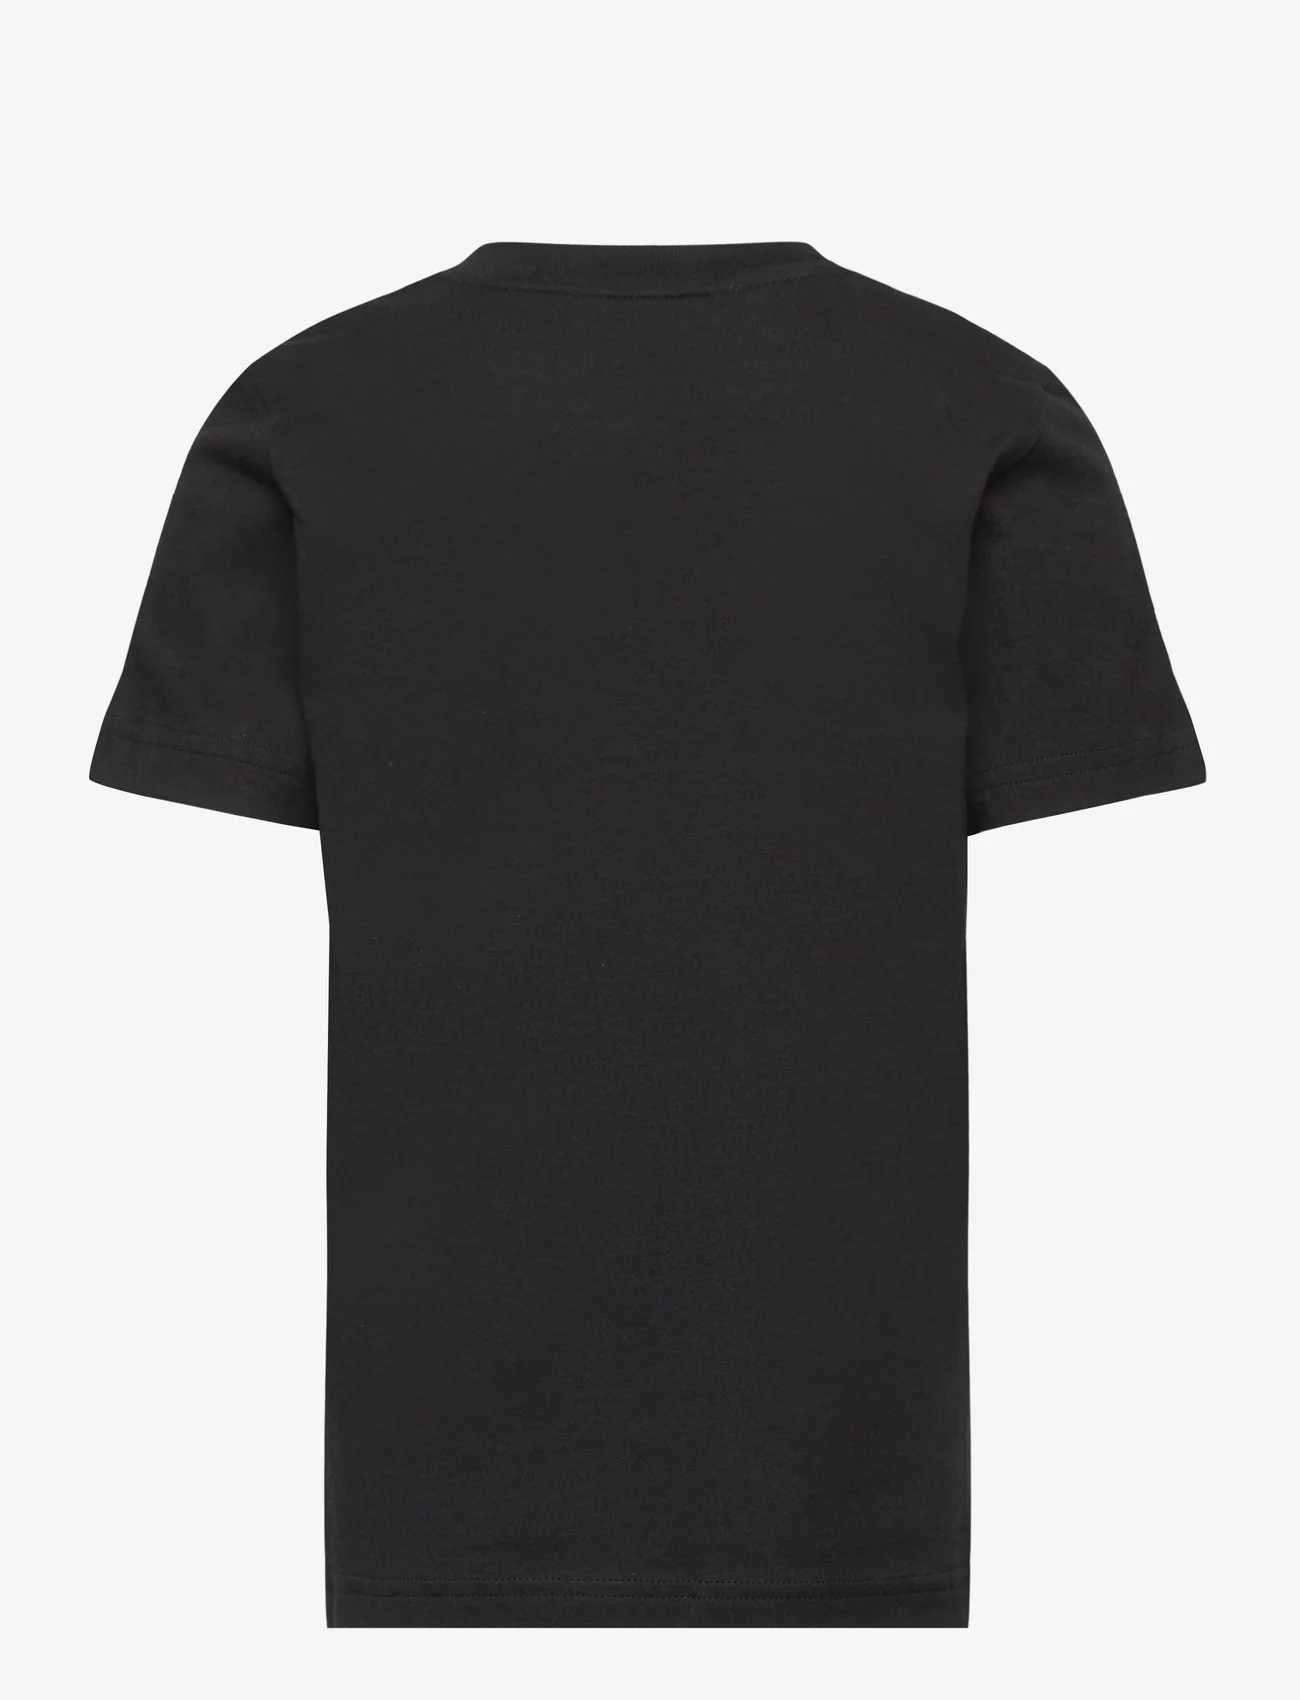 adidas Sportswear - J 3S TIB T - short-sleeved t-shirts - black/grefiv/white - 1